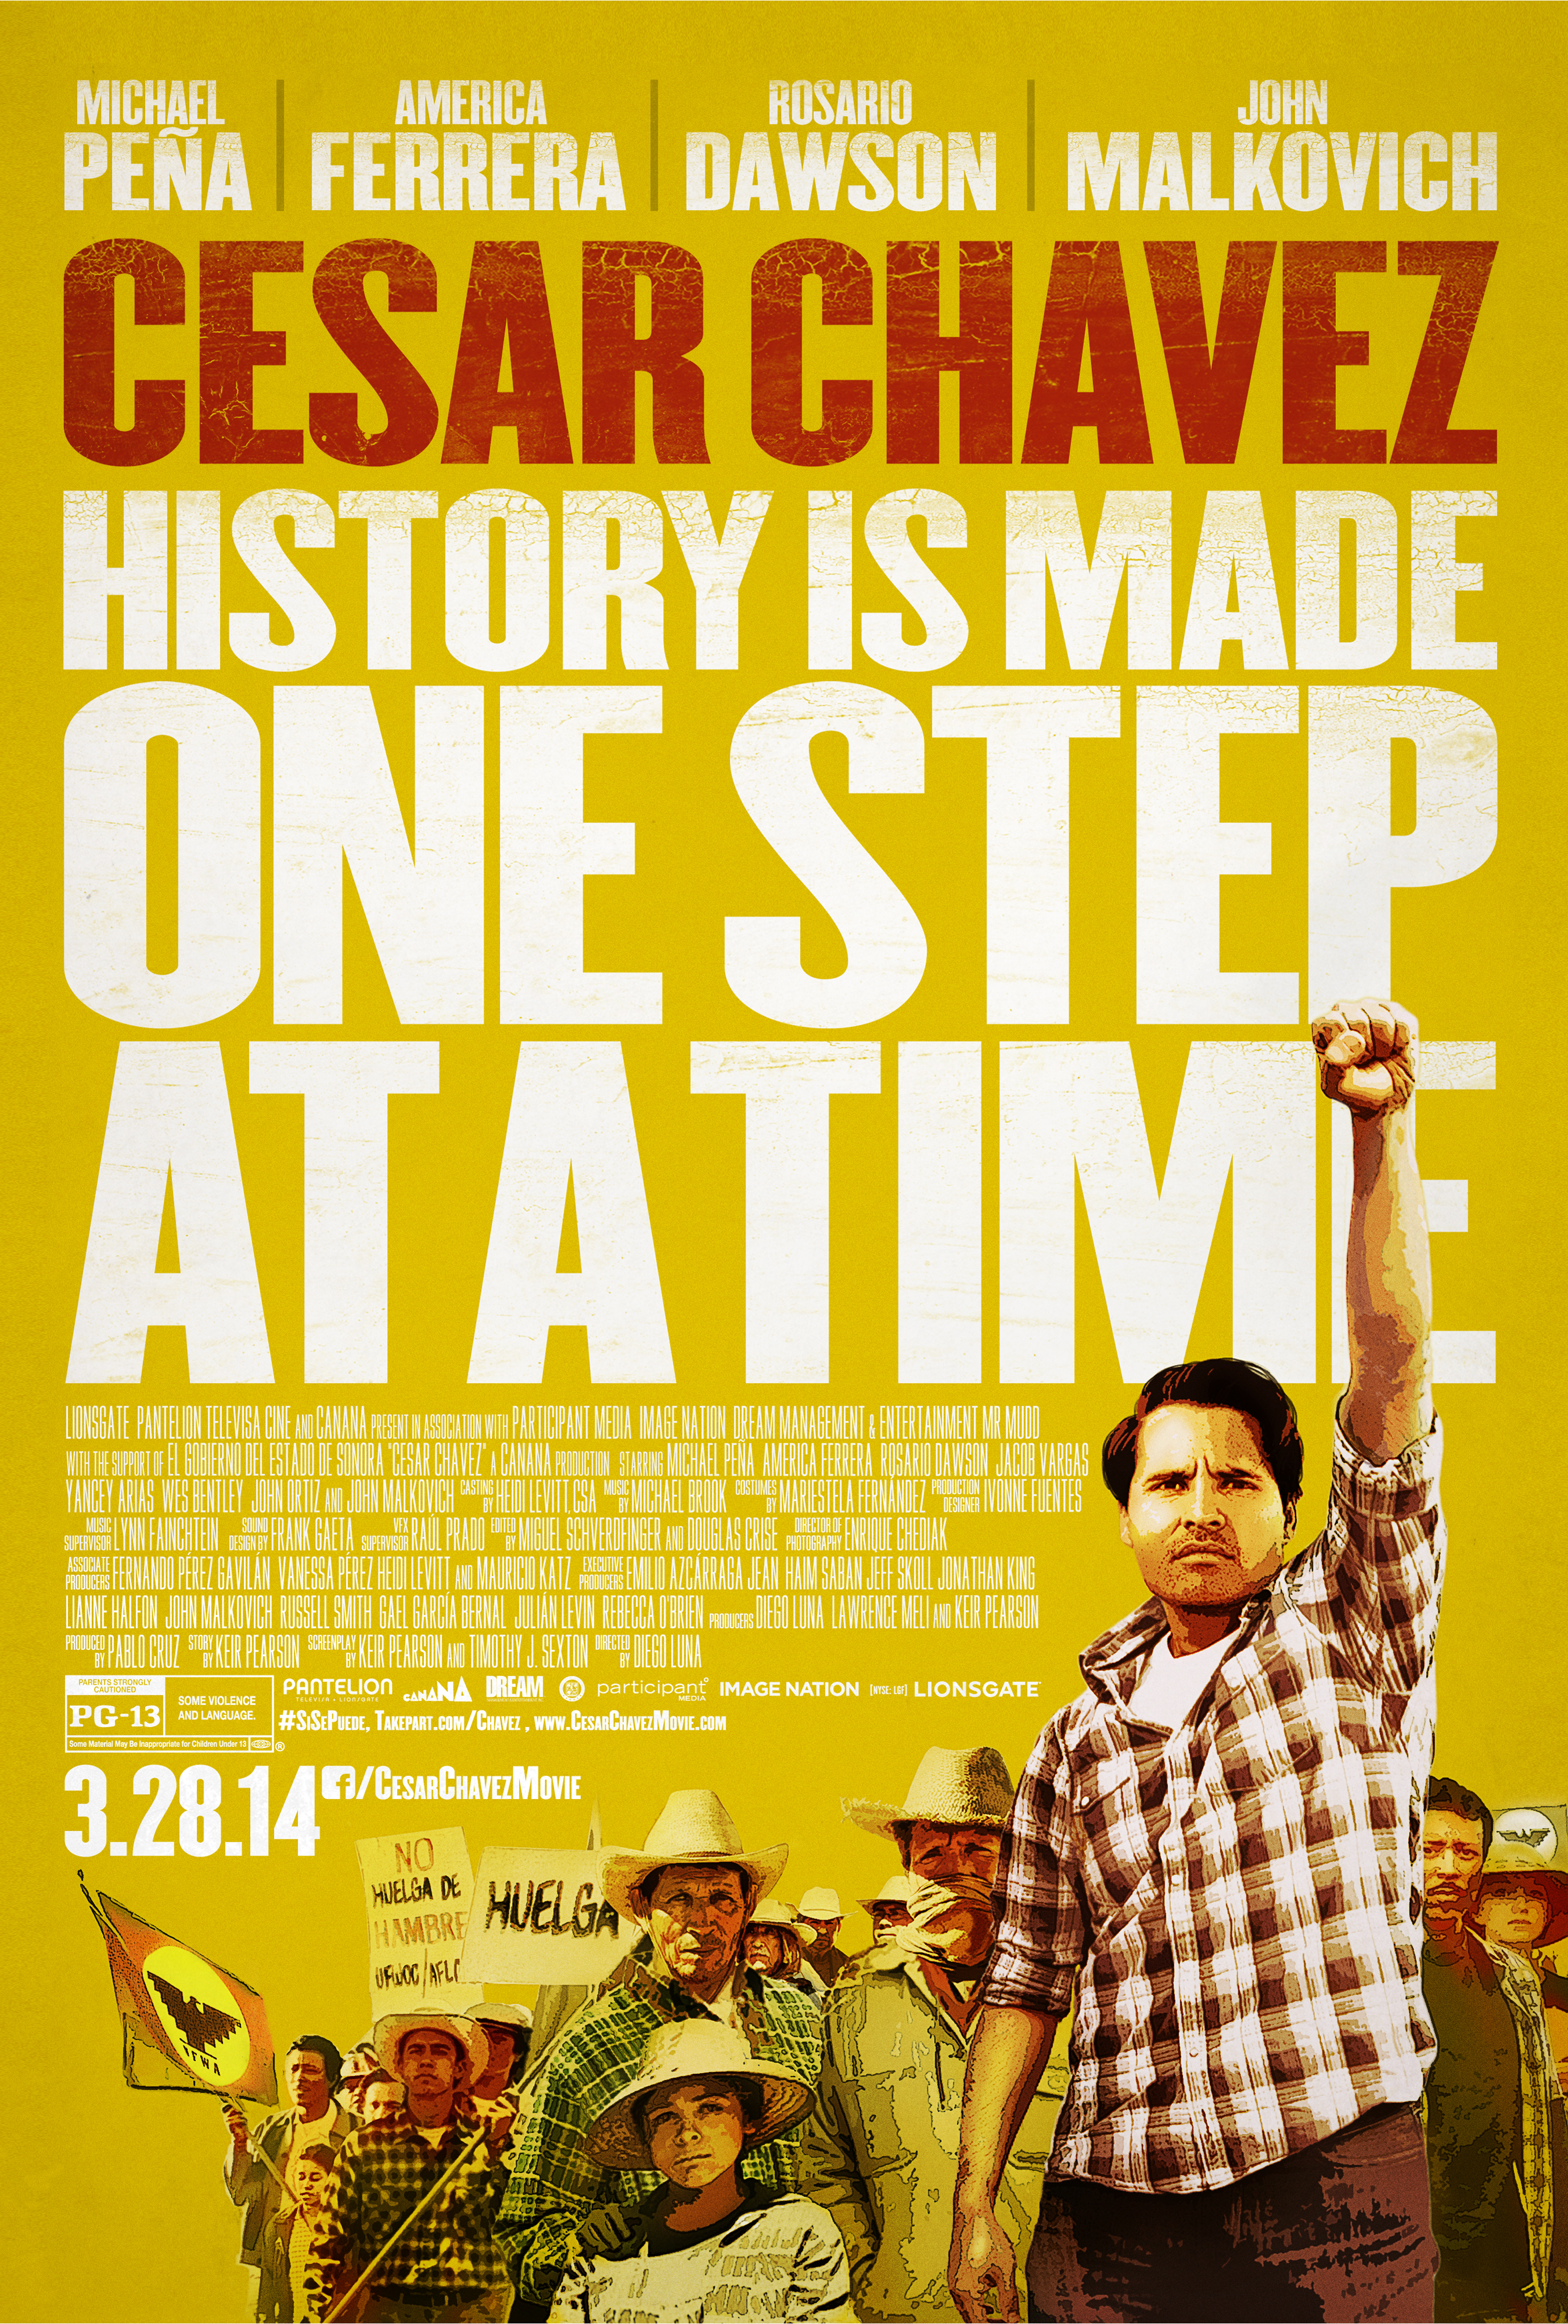 Cesar Chavez movie poster